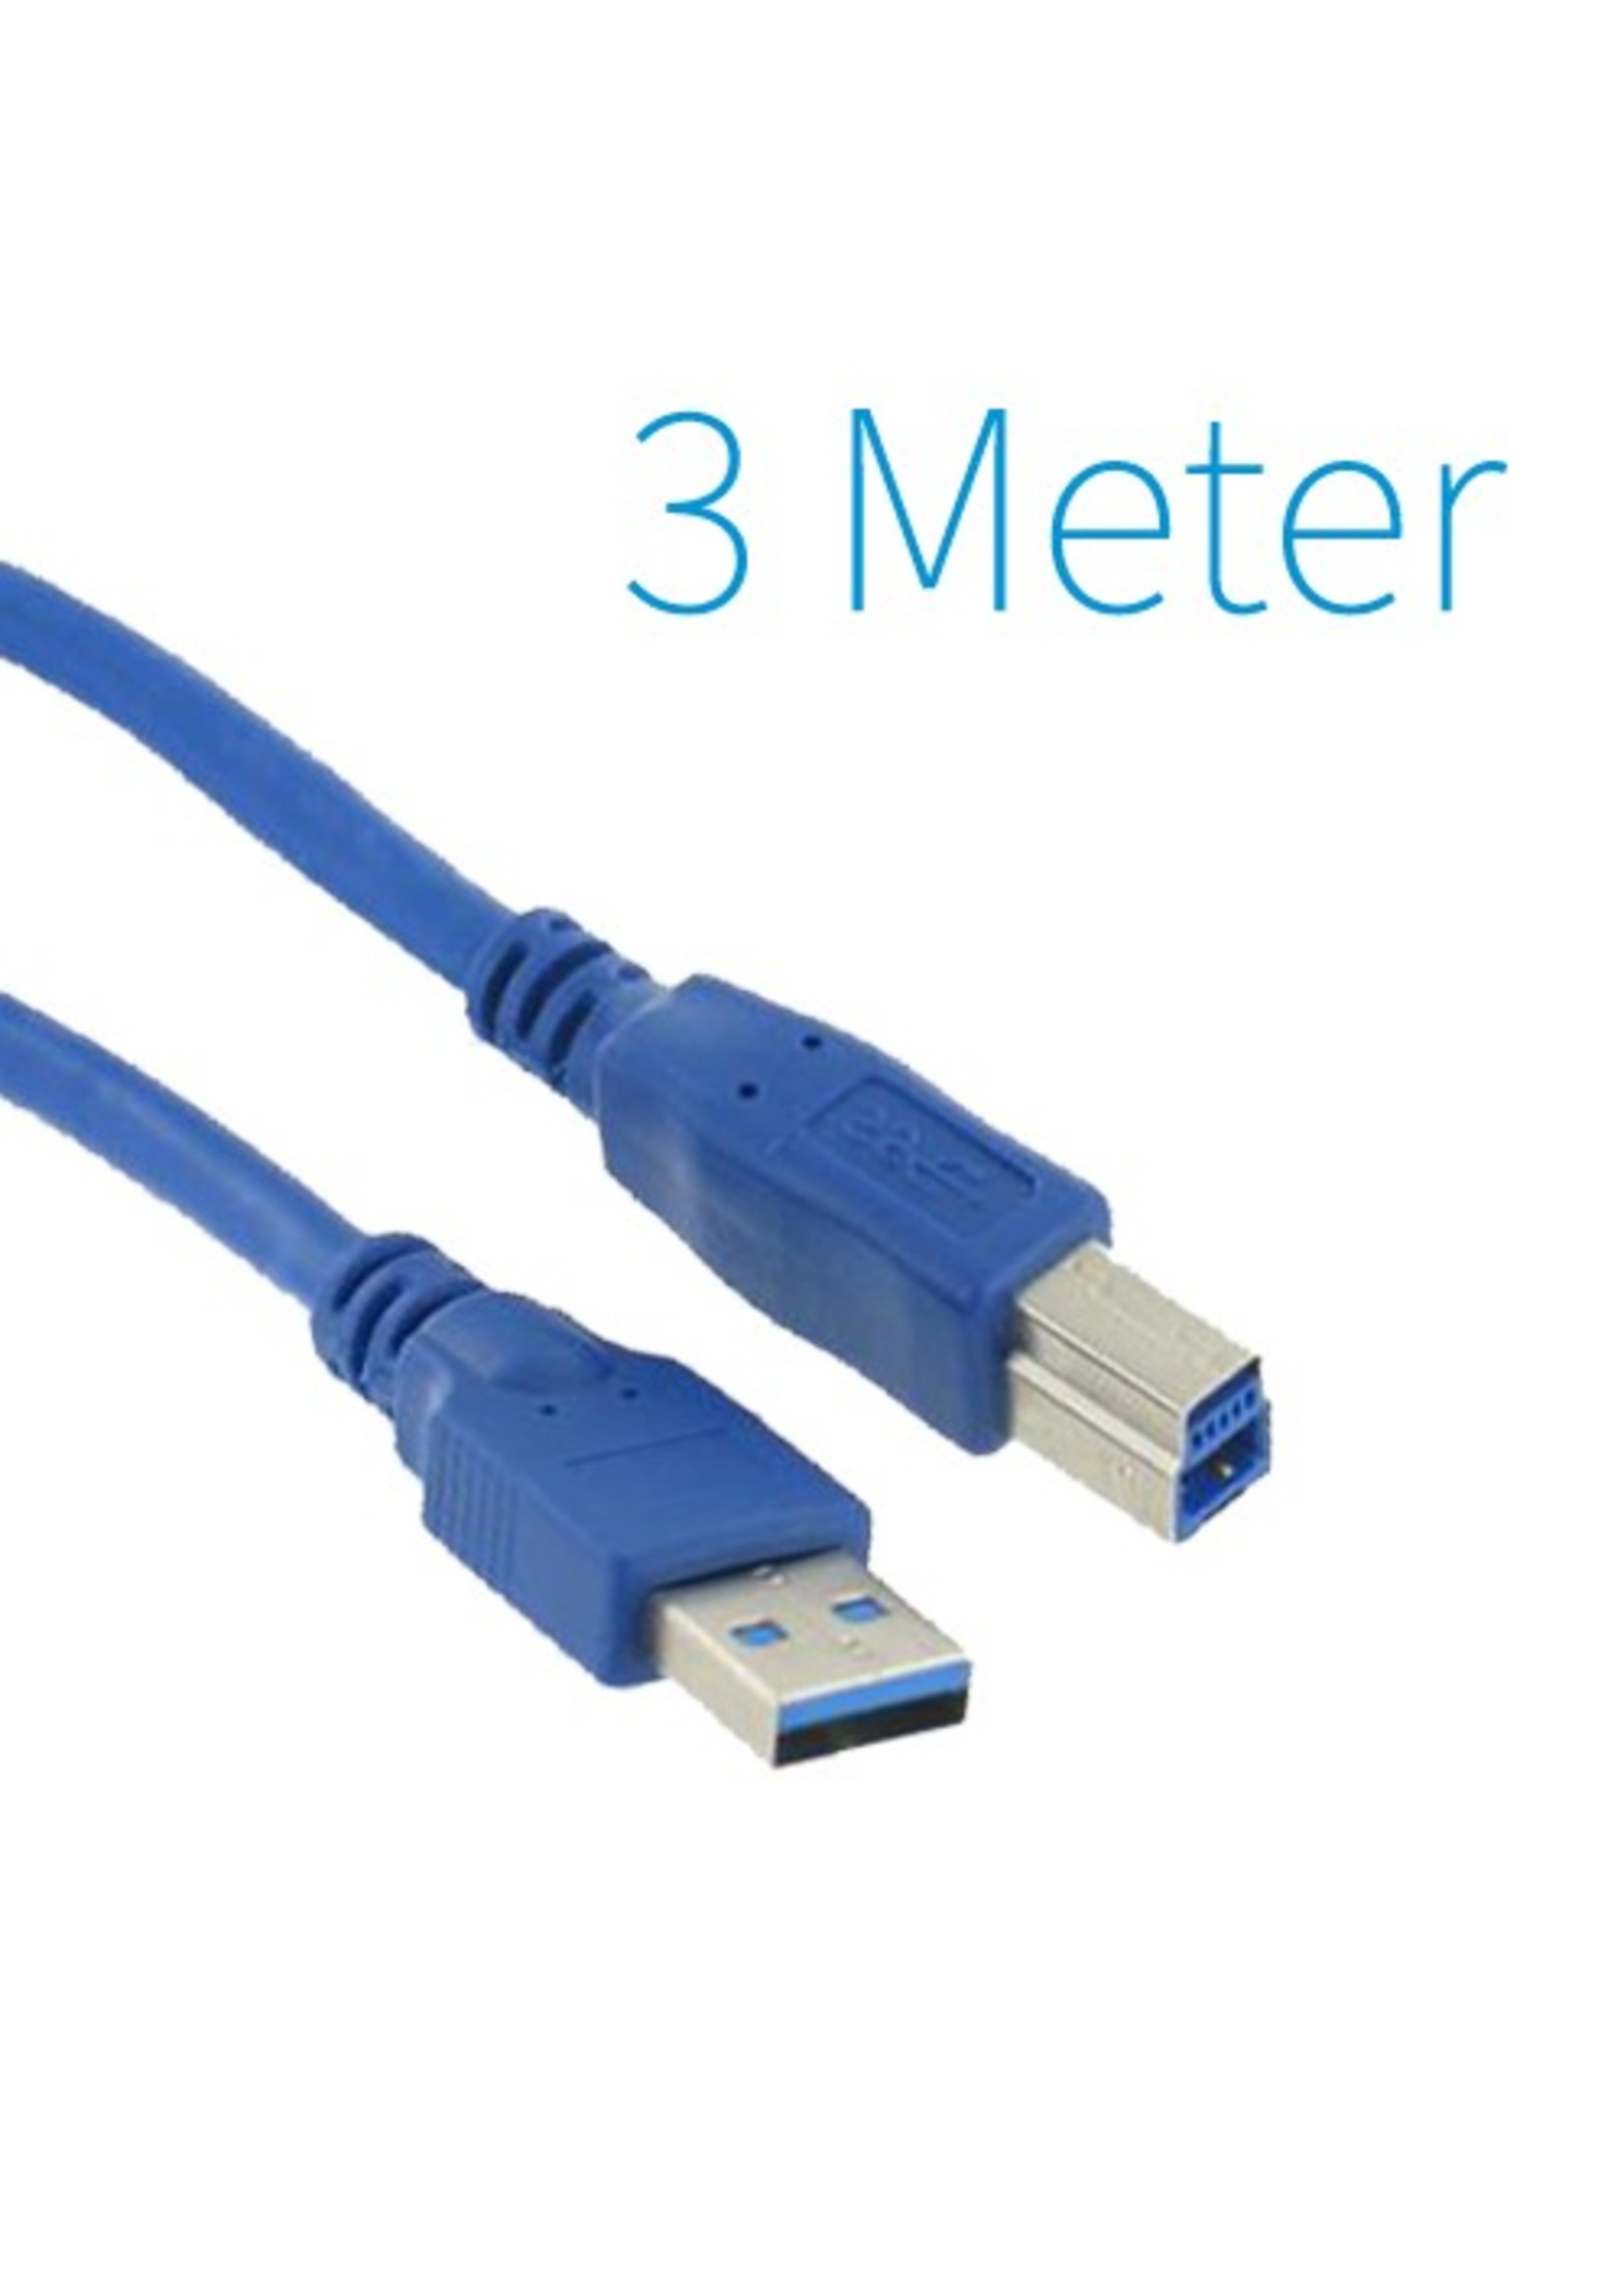 USB 3.0 A - B Printer Cable 3 Meter